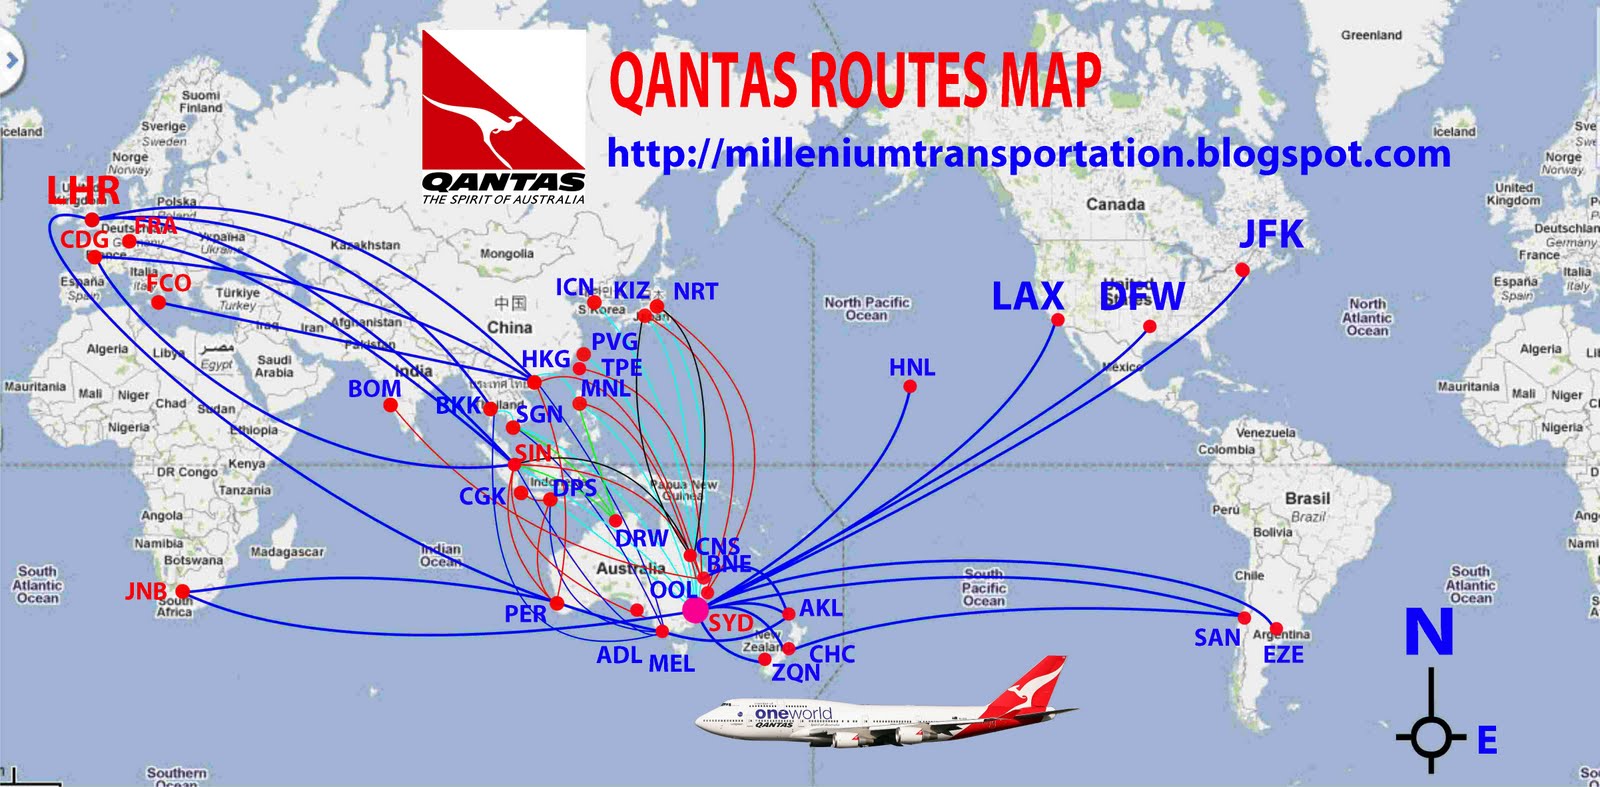 Qantas routes map